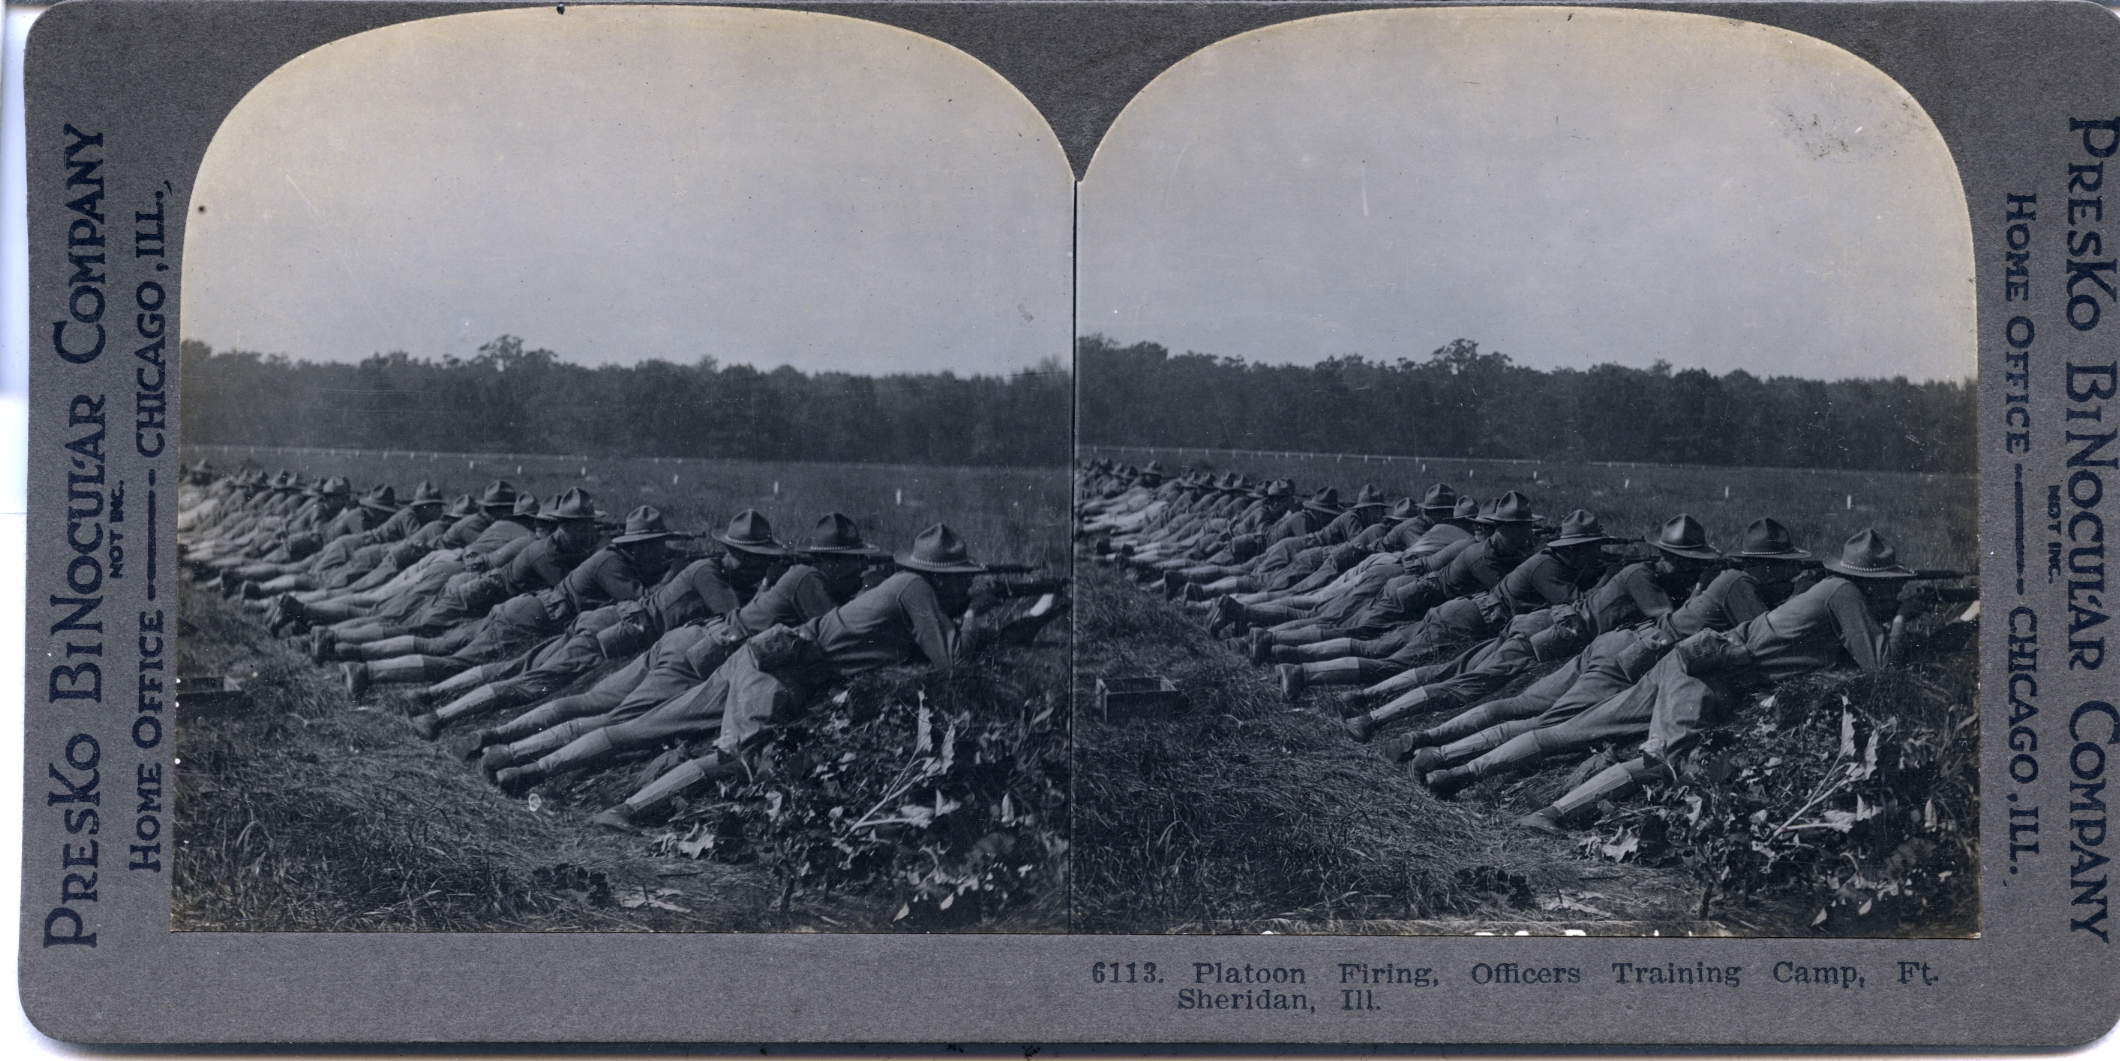 Platoon Firing, Officers Training Camp, Ft. Sheridan, Ill.